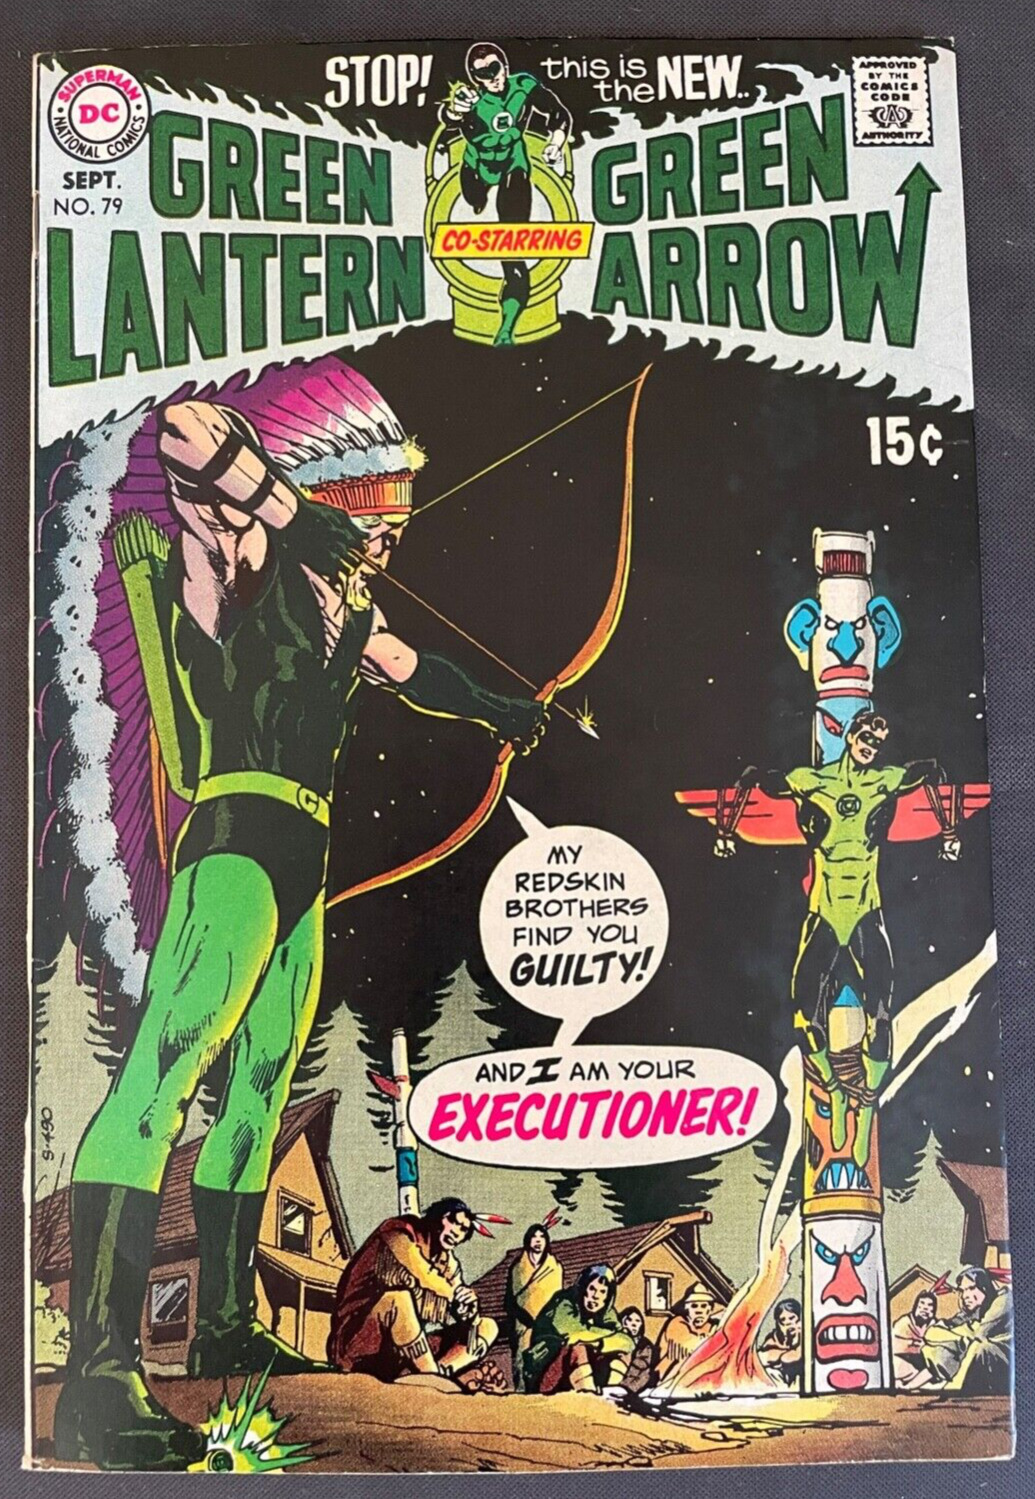 Green Lantern Green Arrow #79 FN/VF+ Cond NEAL ADAMS Cover, Black Canary DC 1970